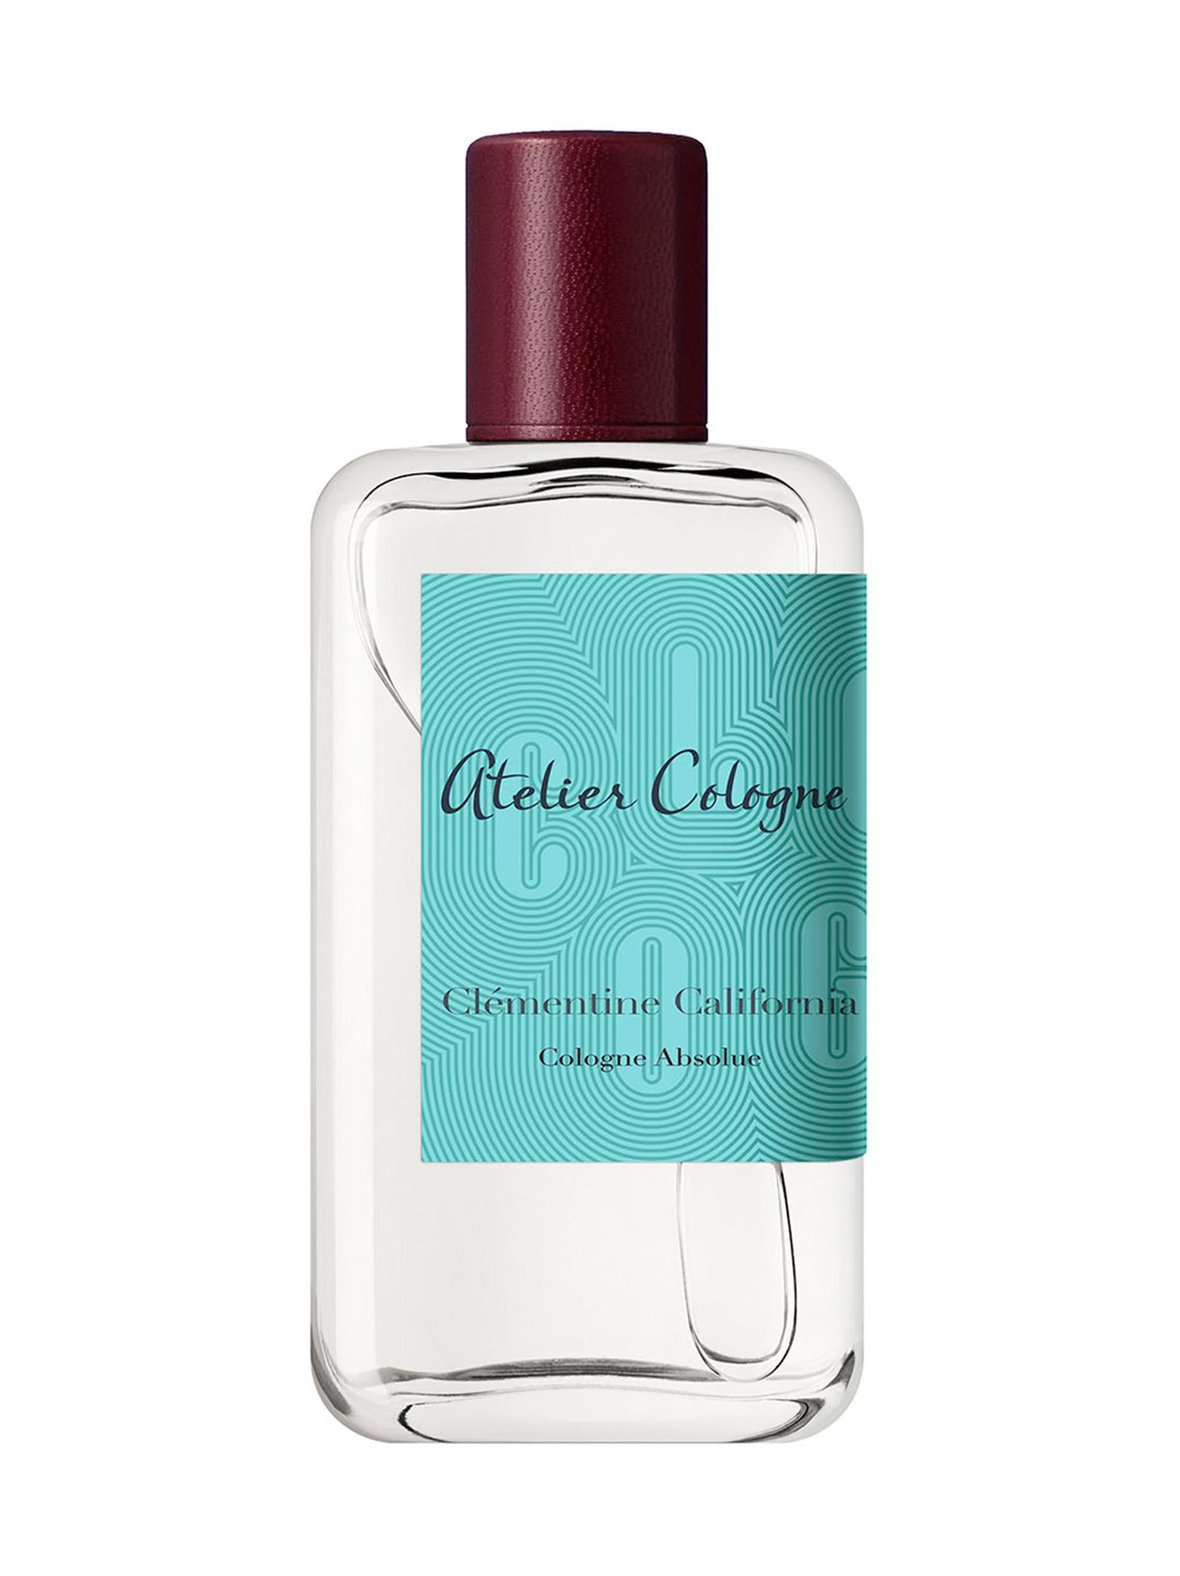 Clémentine California Cologne Absolue -tuoksu, Atelier Cologne